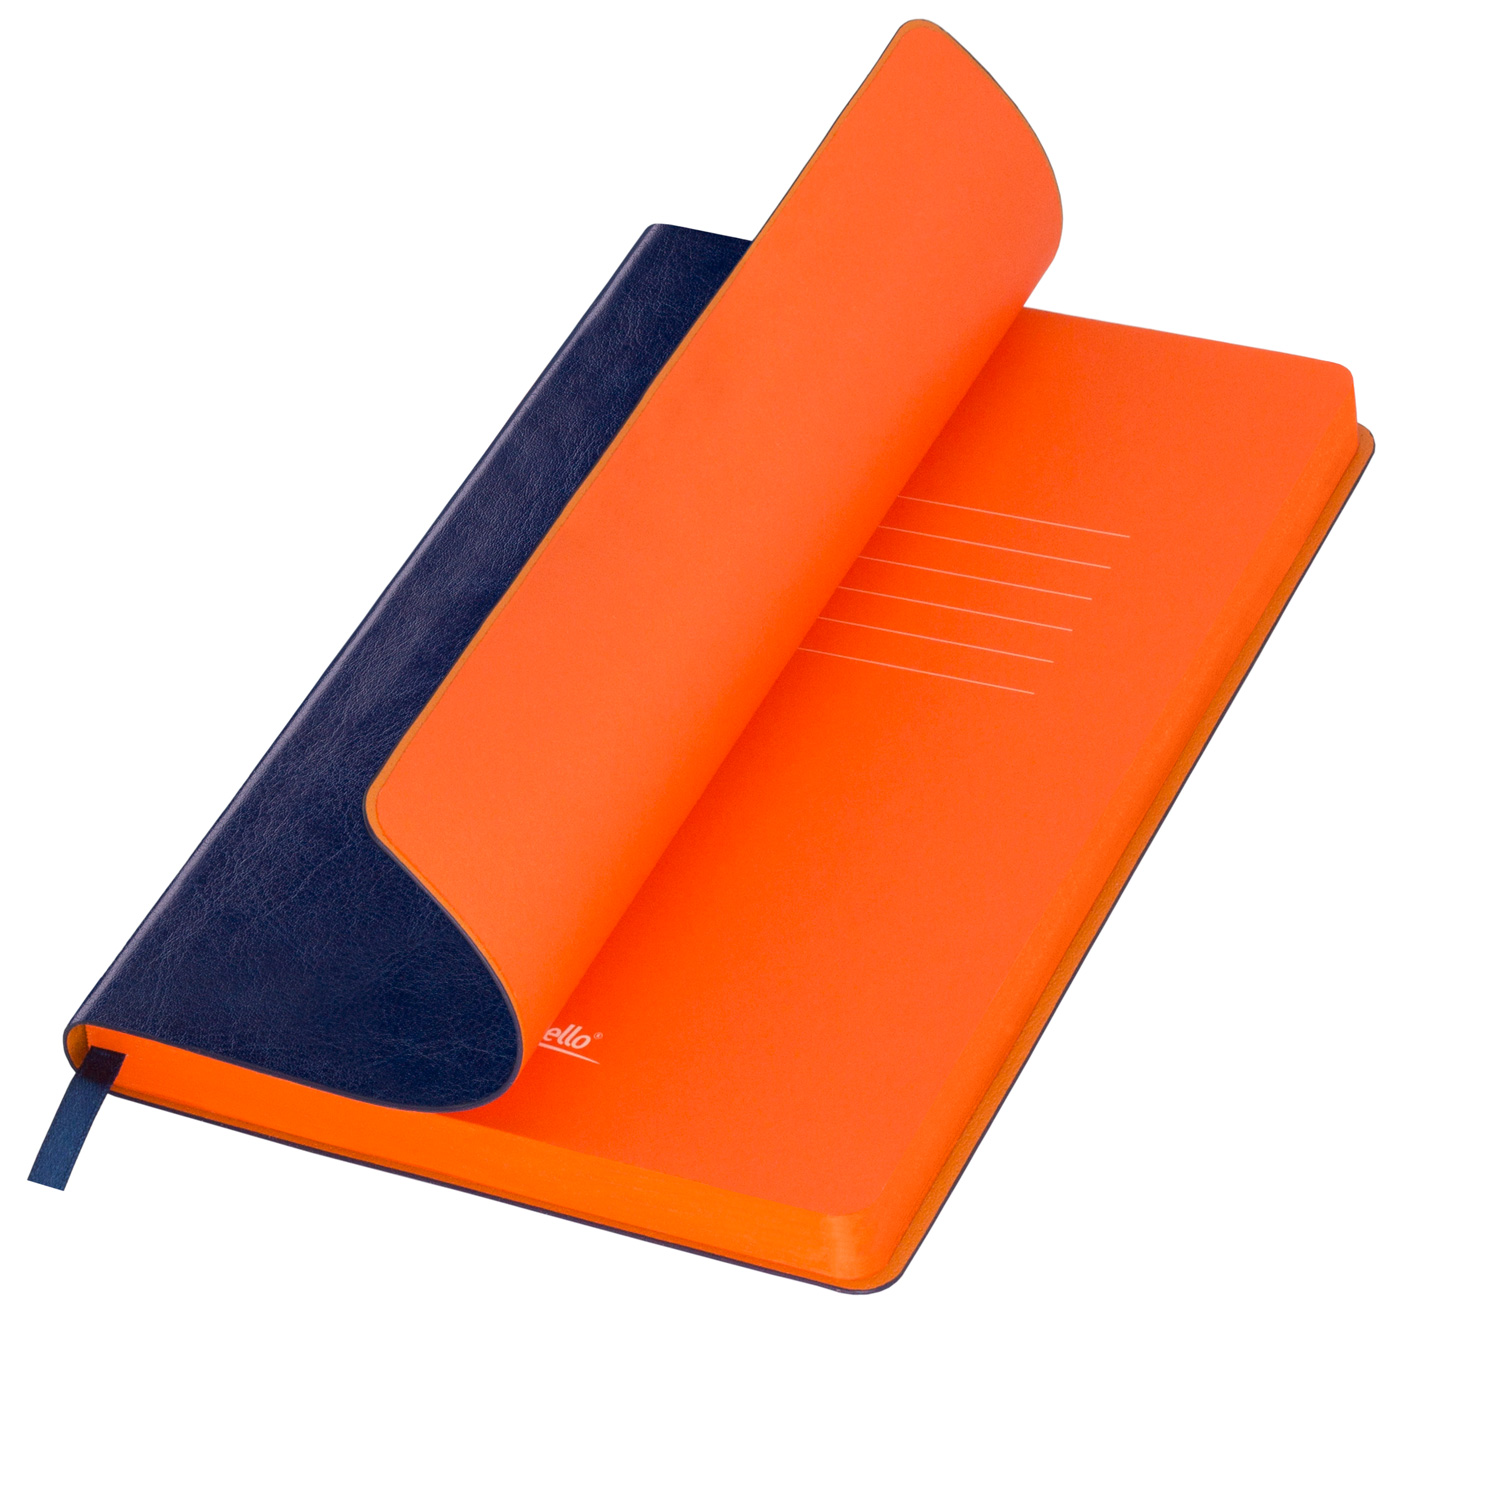 Артикул: A15256.030 — Ежедневник Portobello Trend, River side, недатированный, синий/оранжевый